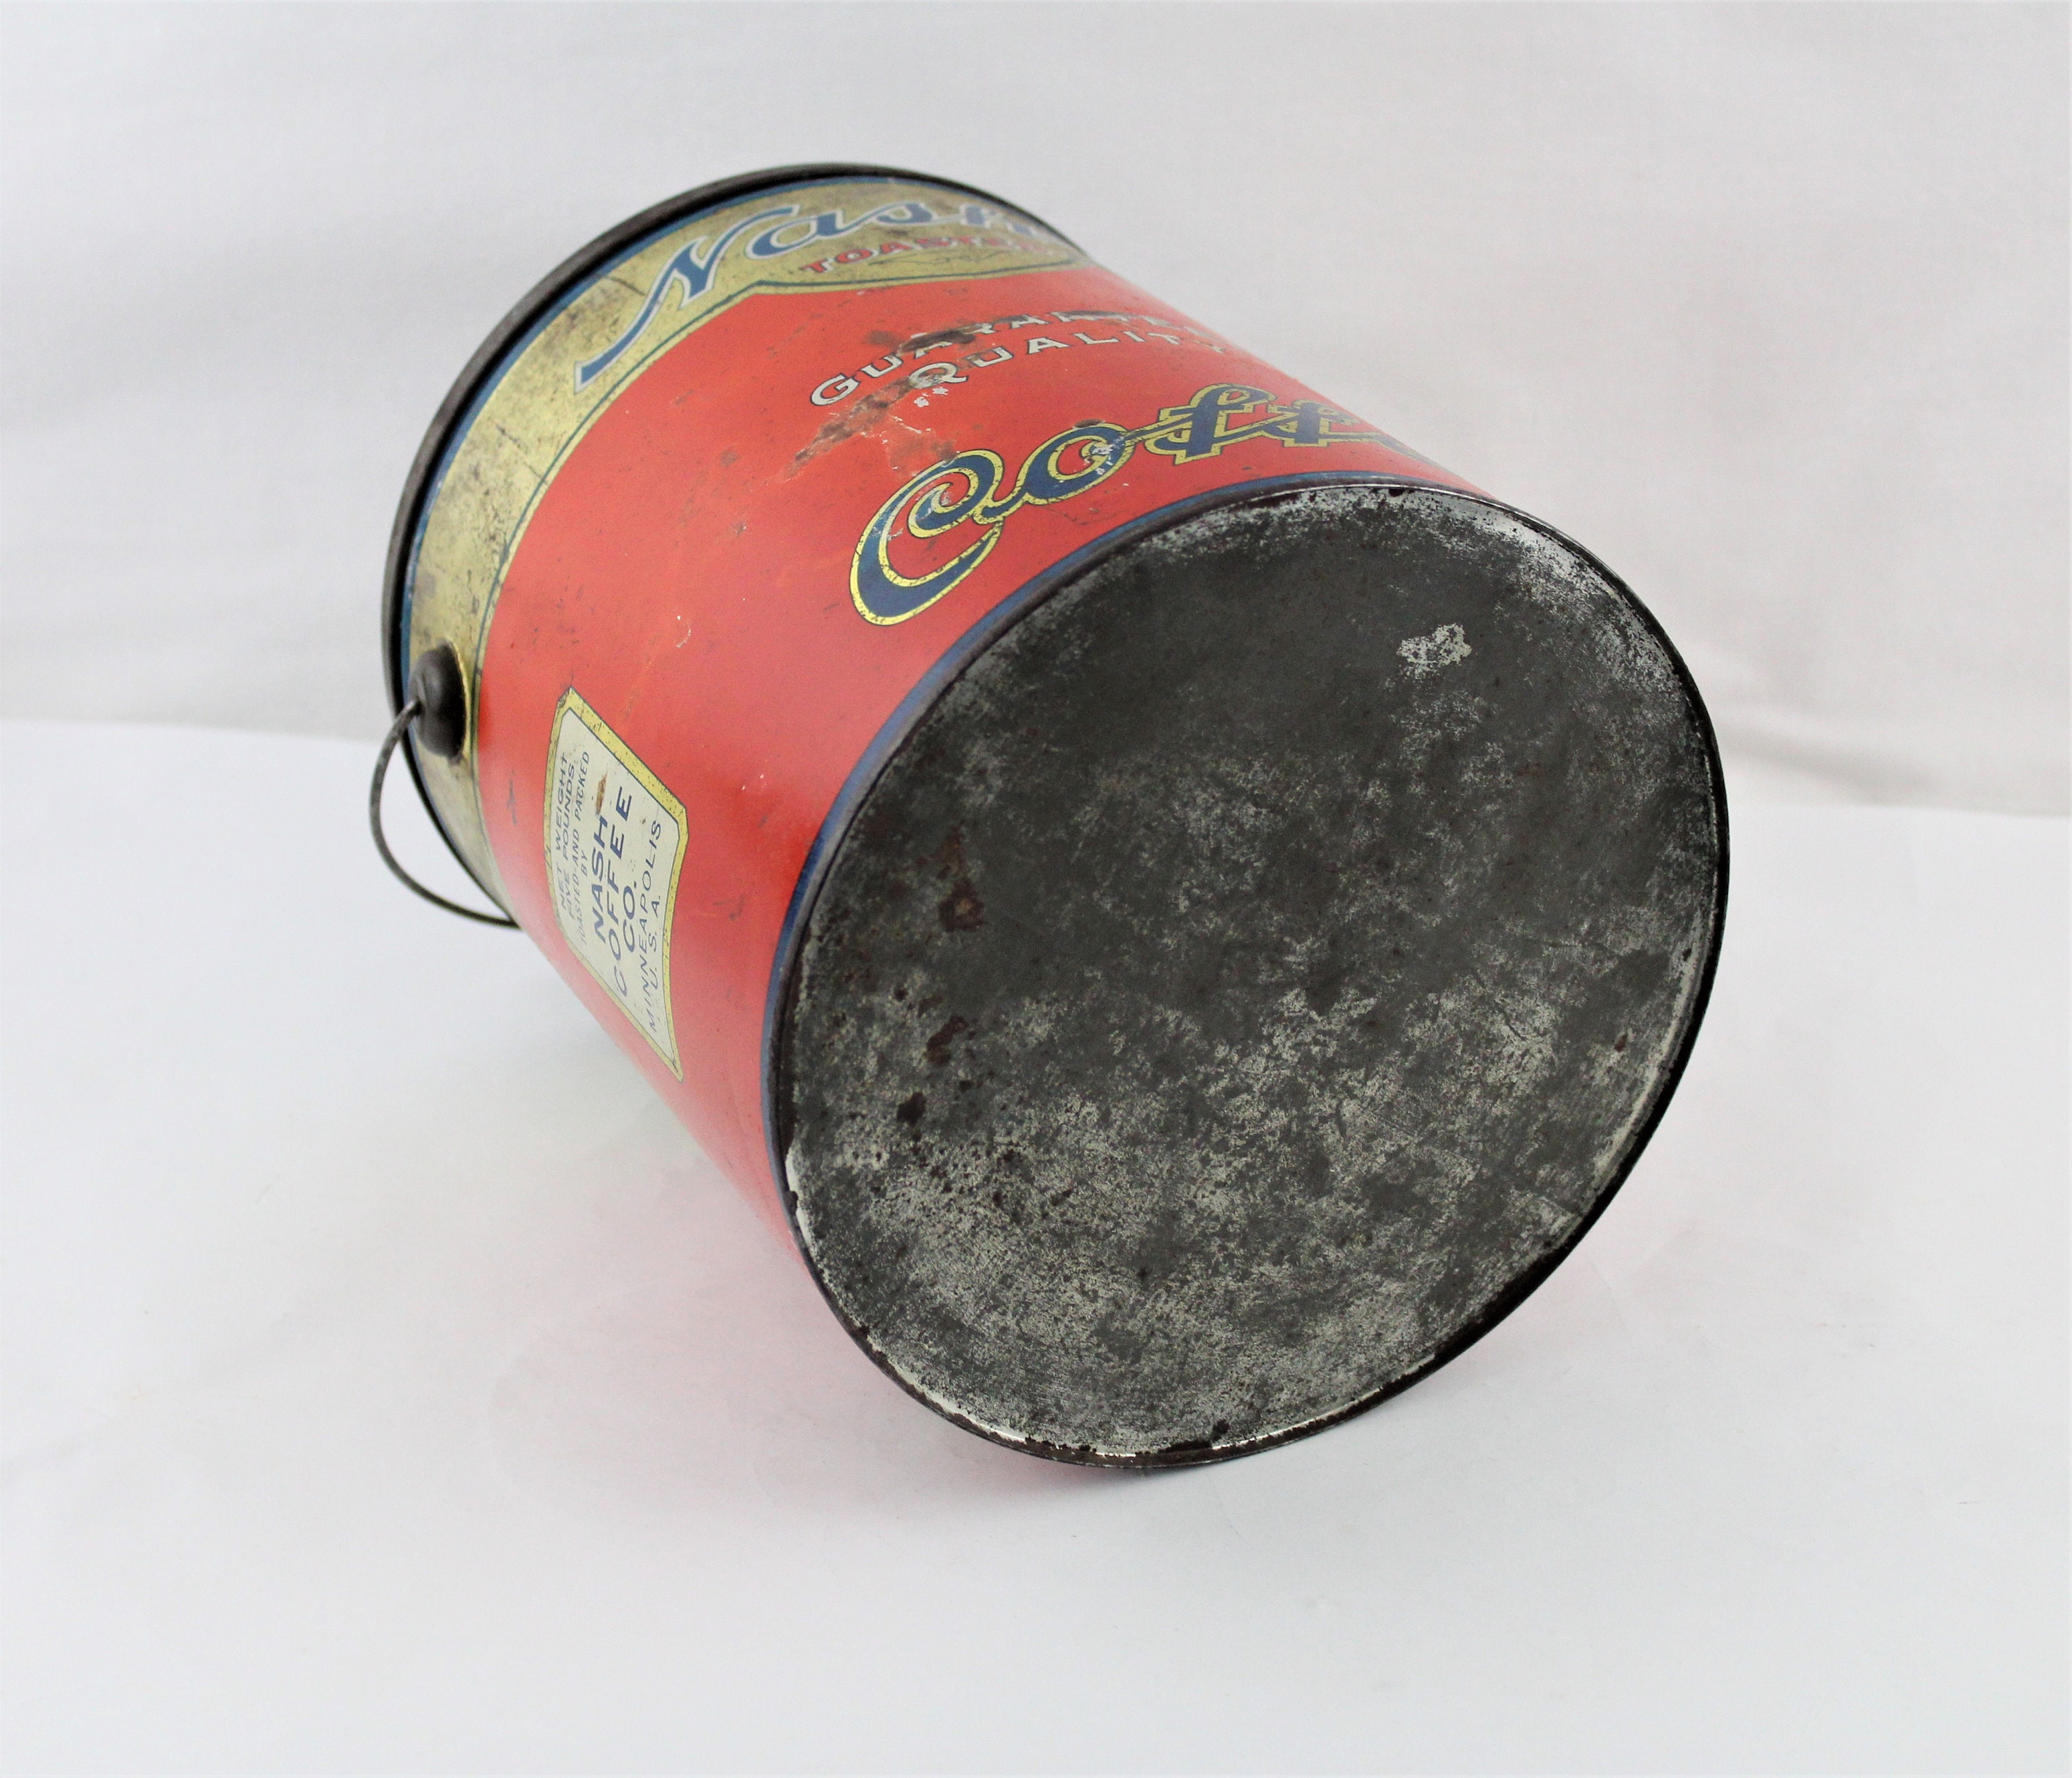 Vintage Yuban & Bliss Coffee Tins circa 1920s-1940s - Sold